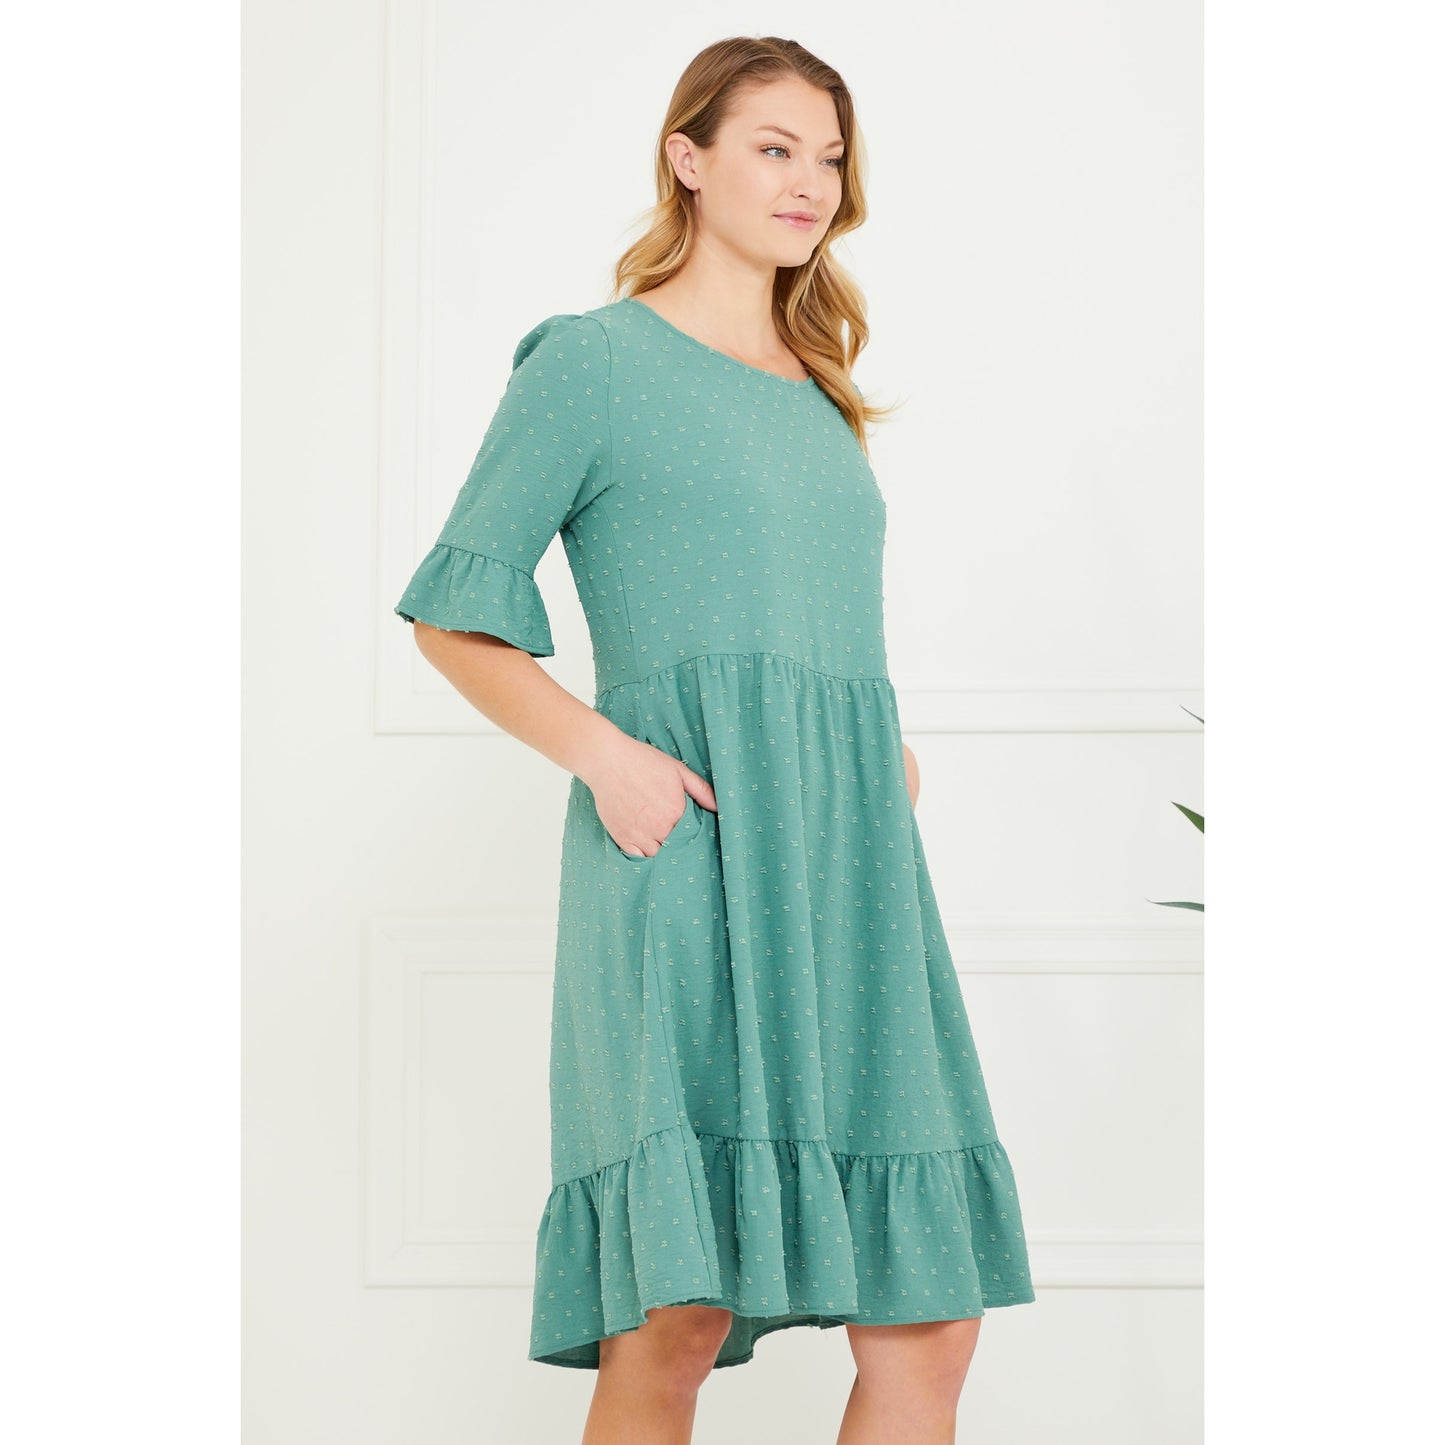 The Railynn Green Woven Textured Babydoll Dress - USA Made